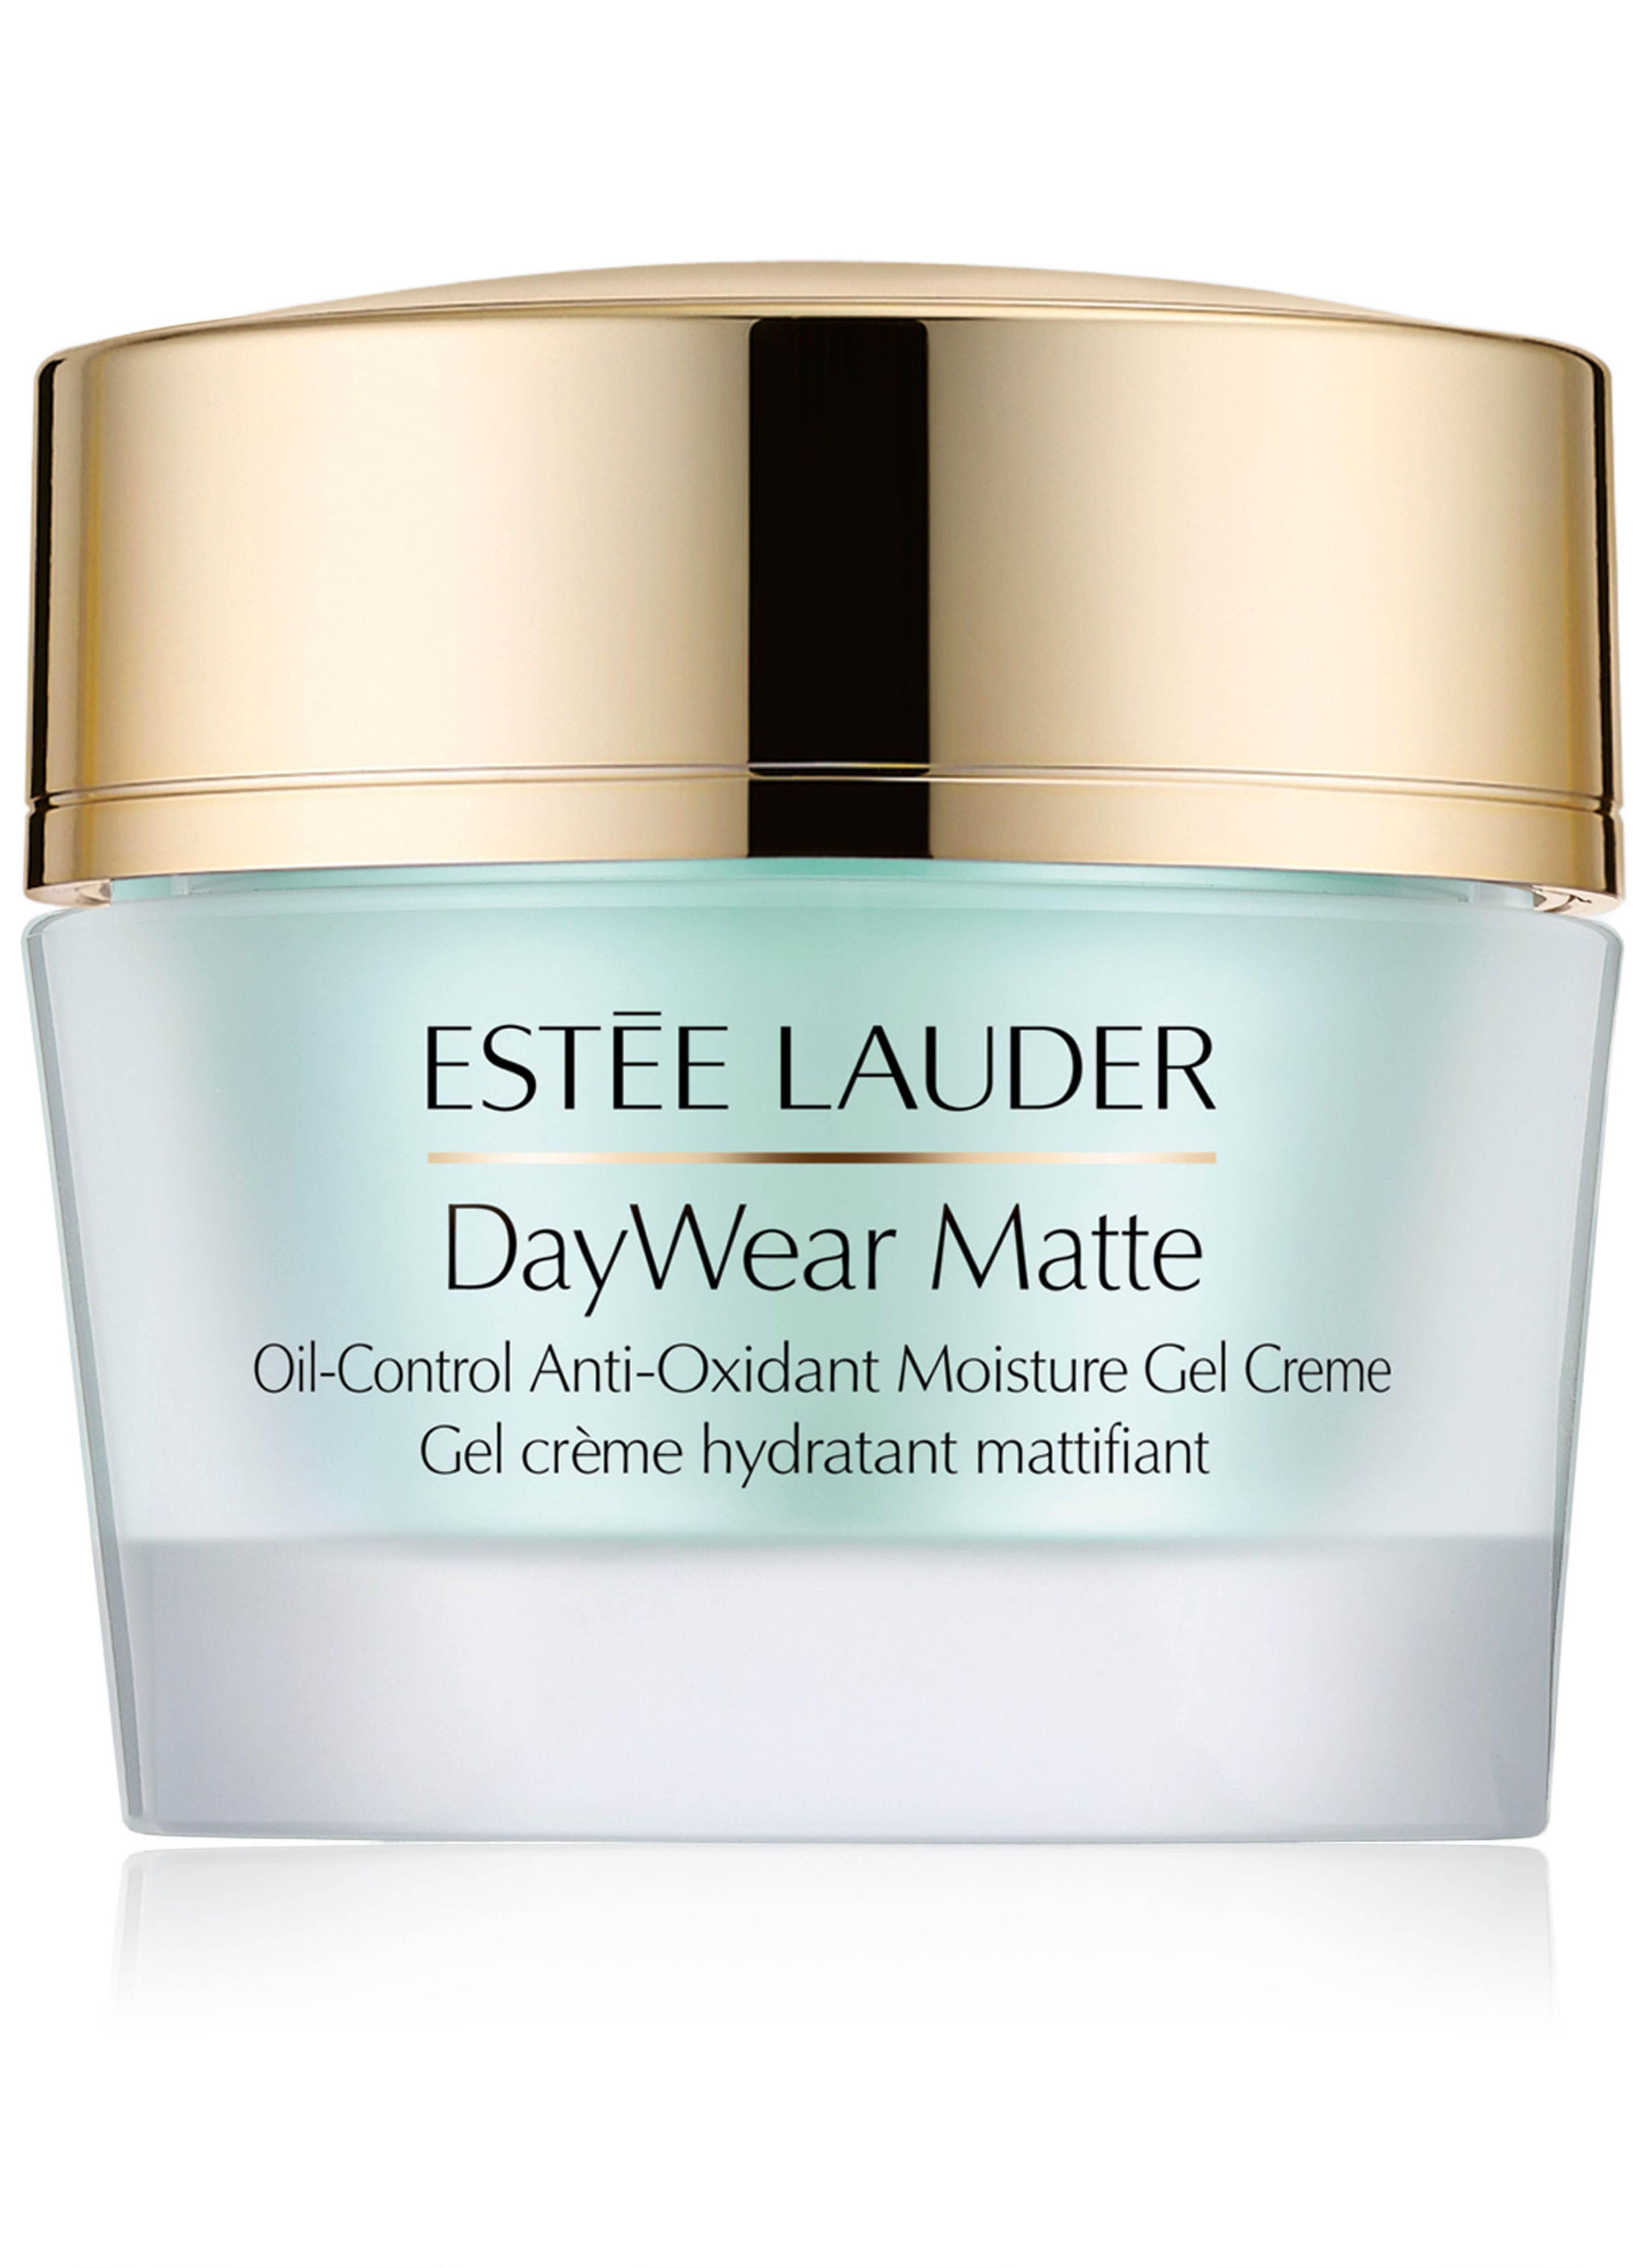 Estee Lauder Daywear Matte Moisturizer Oil-control Antioxidant Moisture Gel Crème 1